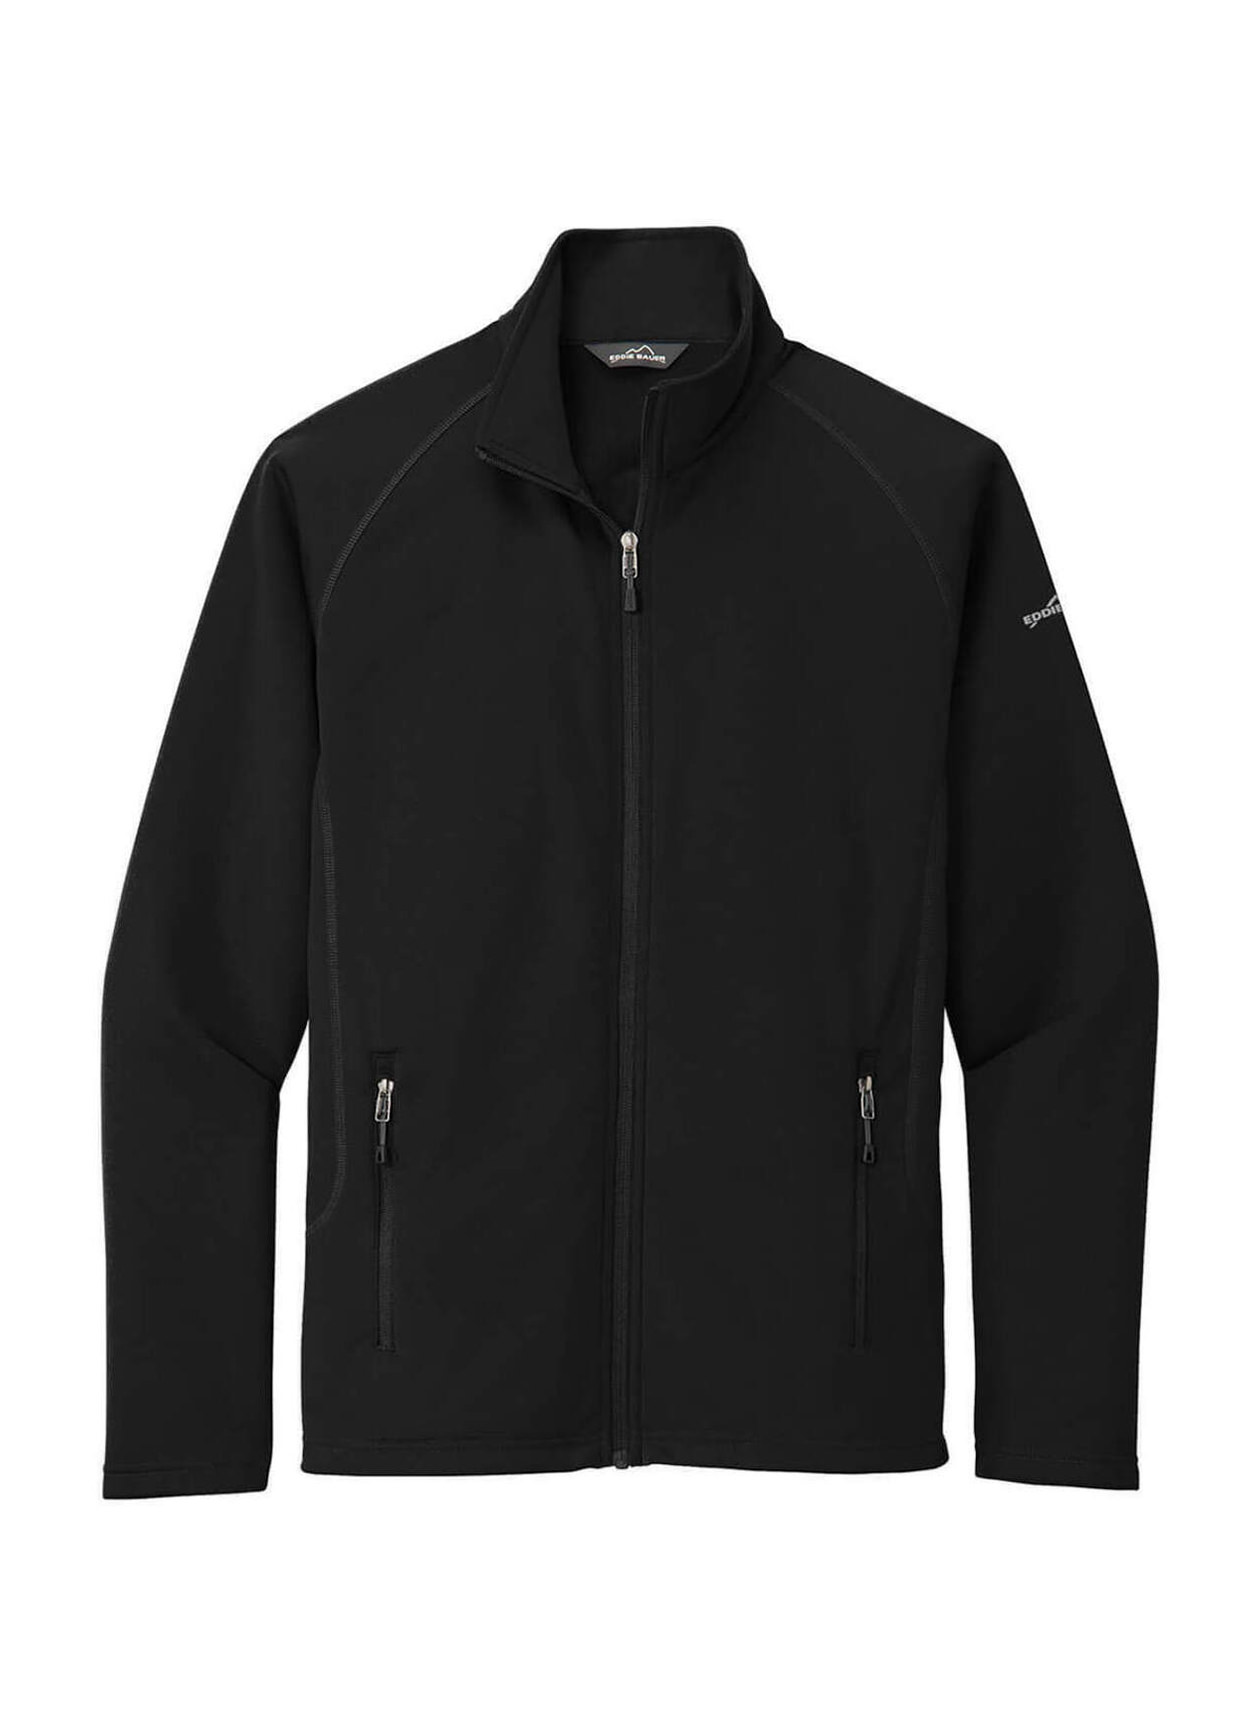 Eddie Bauer Men's Black Fleece-Lined Jacket